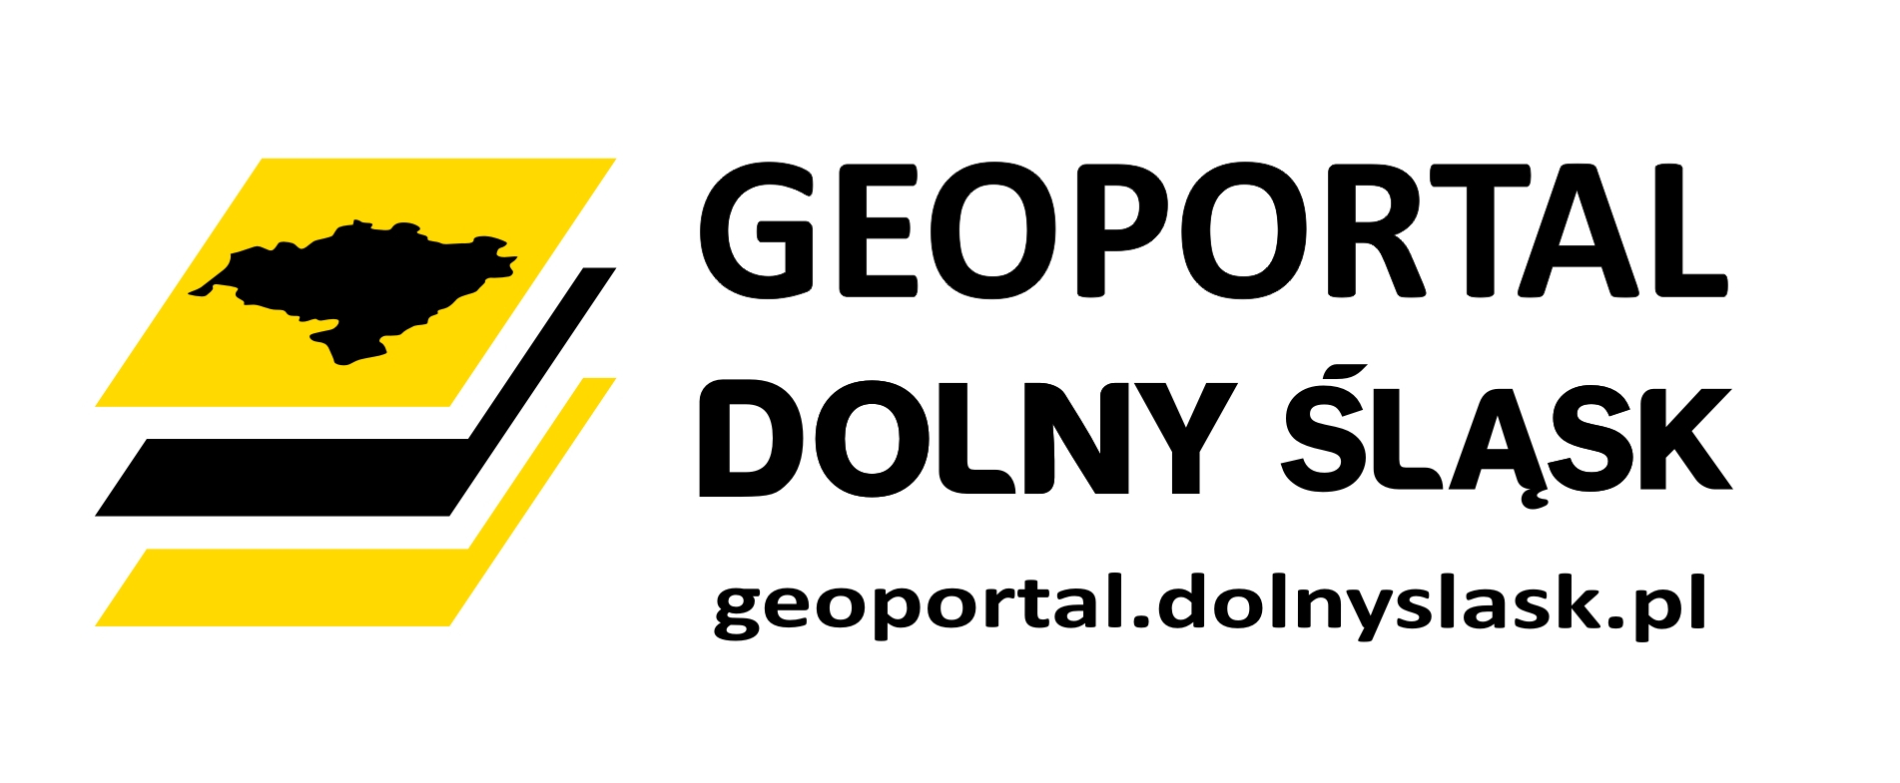 logo_geoportal_poziome.jpg